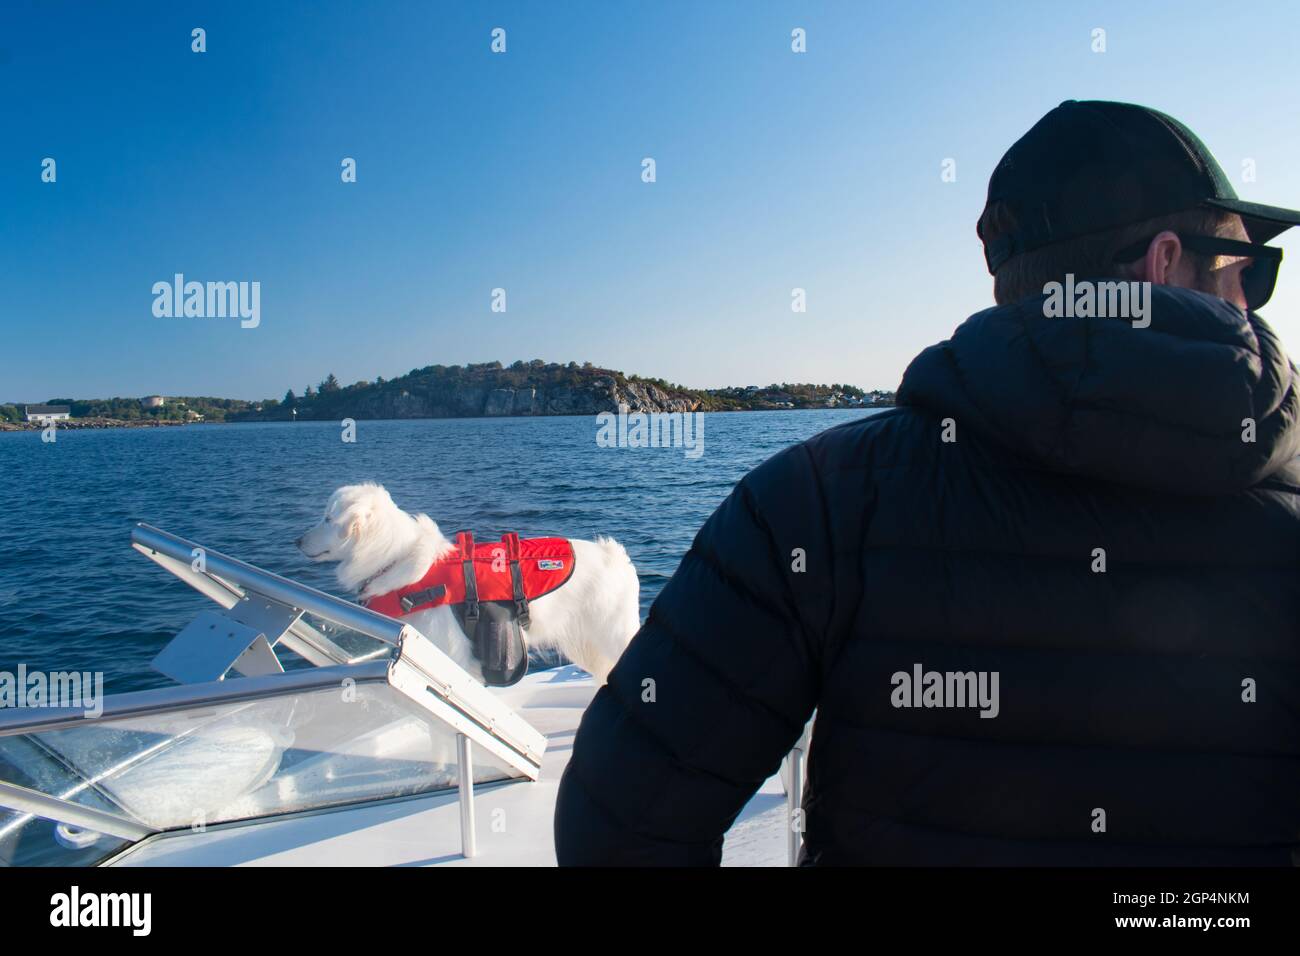 White Husky Dog On Motor Boat Wearing Orange Lifejacket with Water in Background Stock Photo